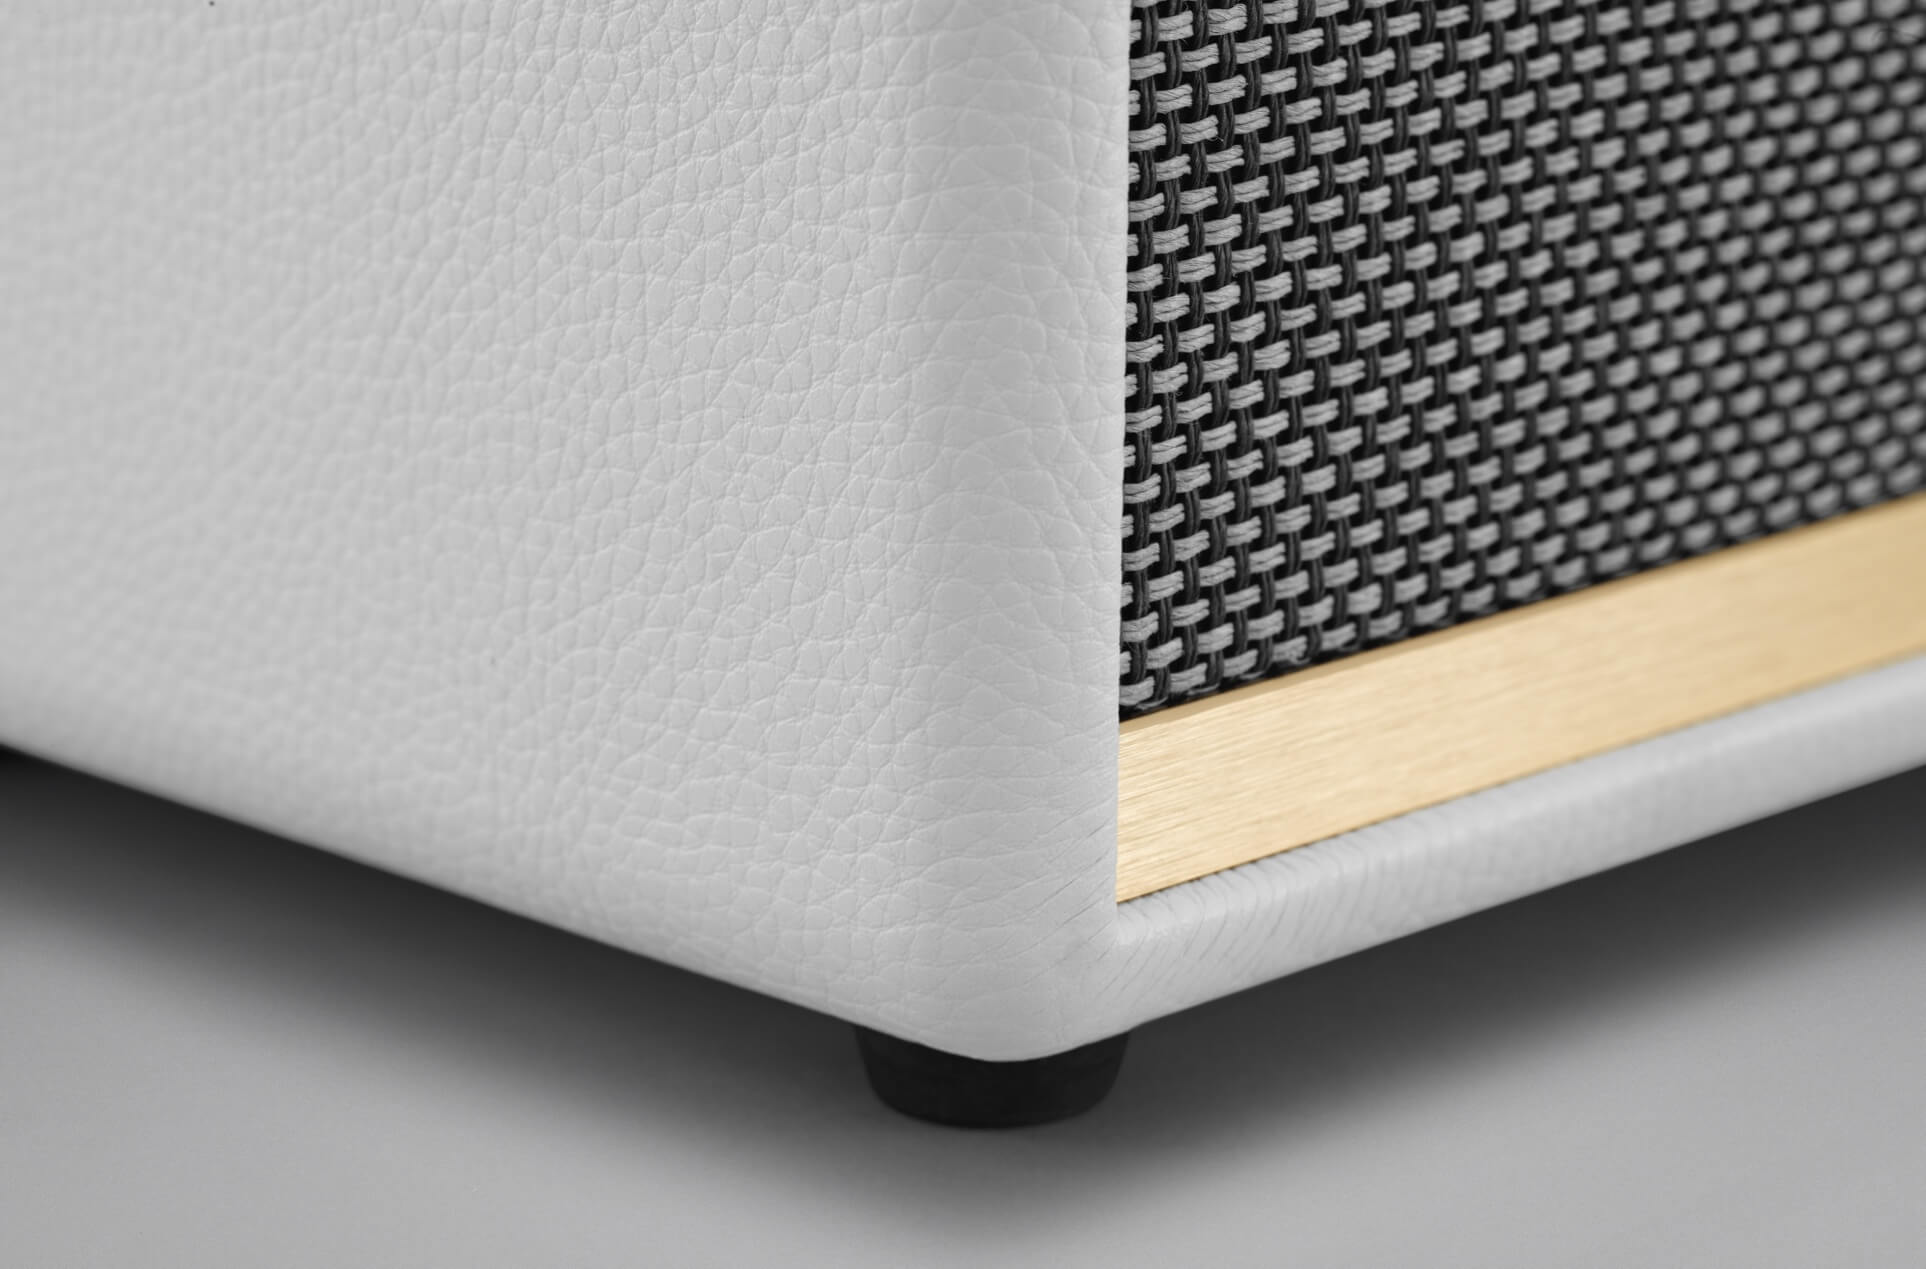 Marshall Stanmore II Wireless Speaker – Bealtag